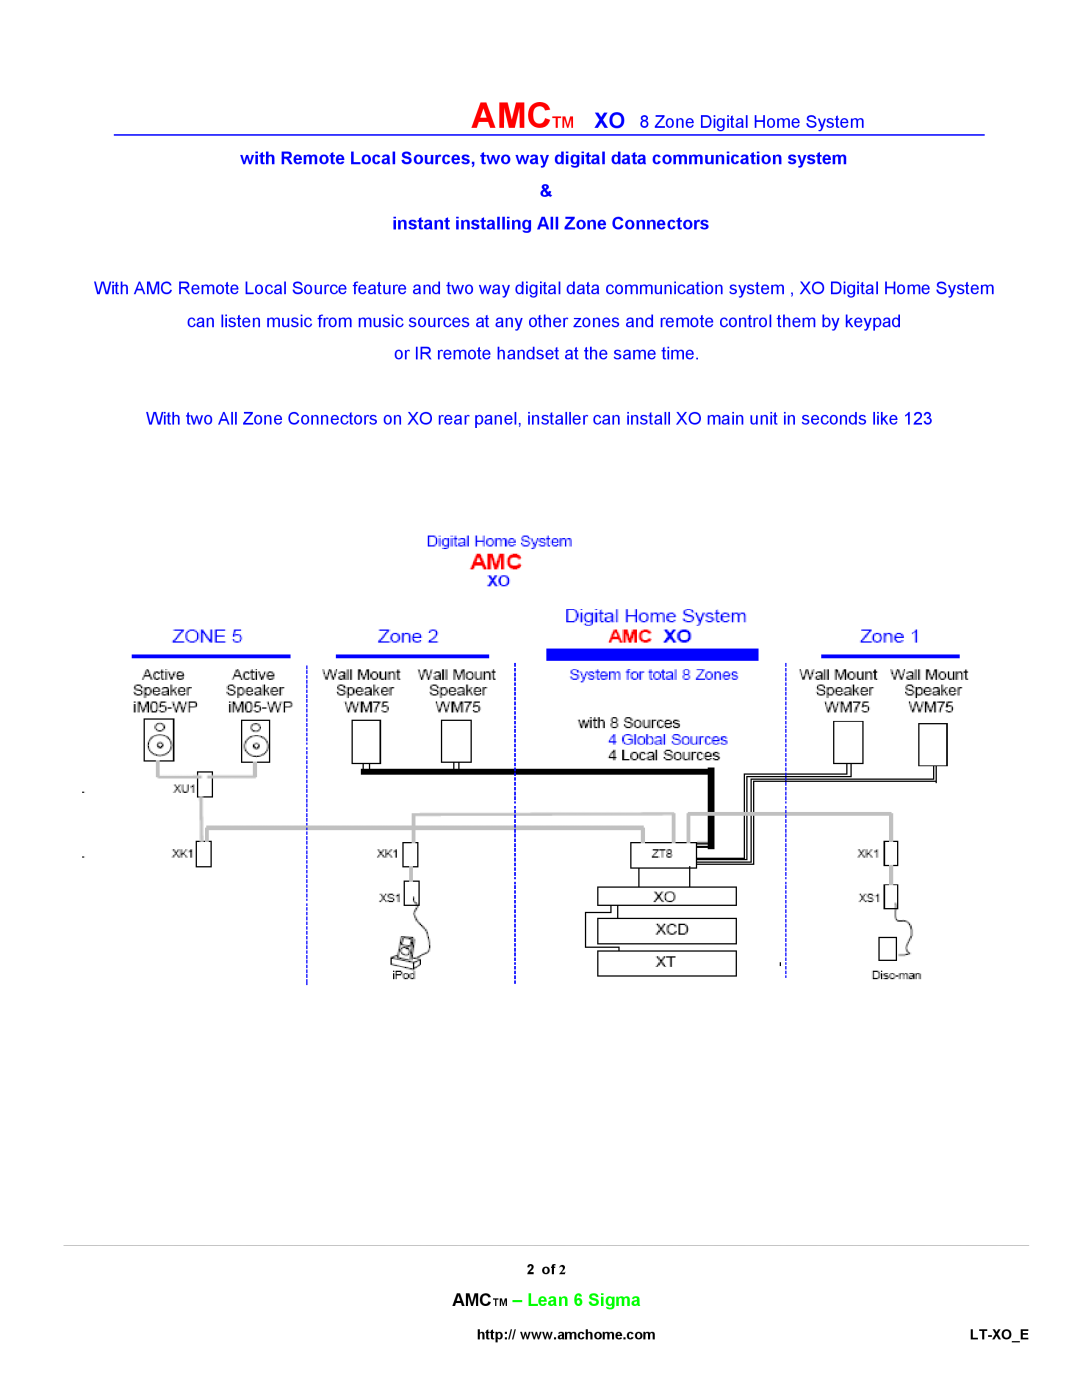 AMC XO manual instant installing All Zone Connectors, AMCTM - Lean 6 Sigma 